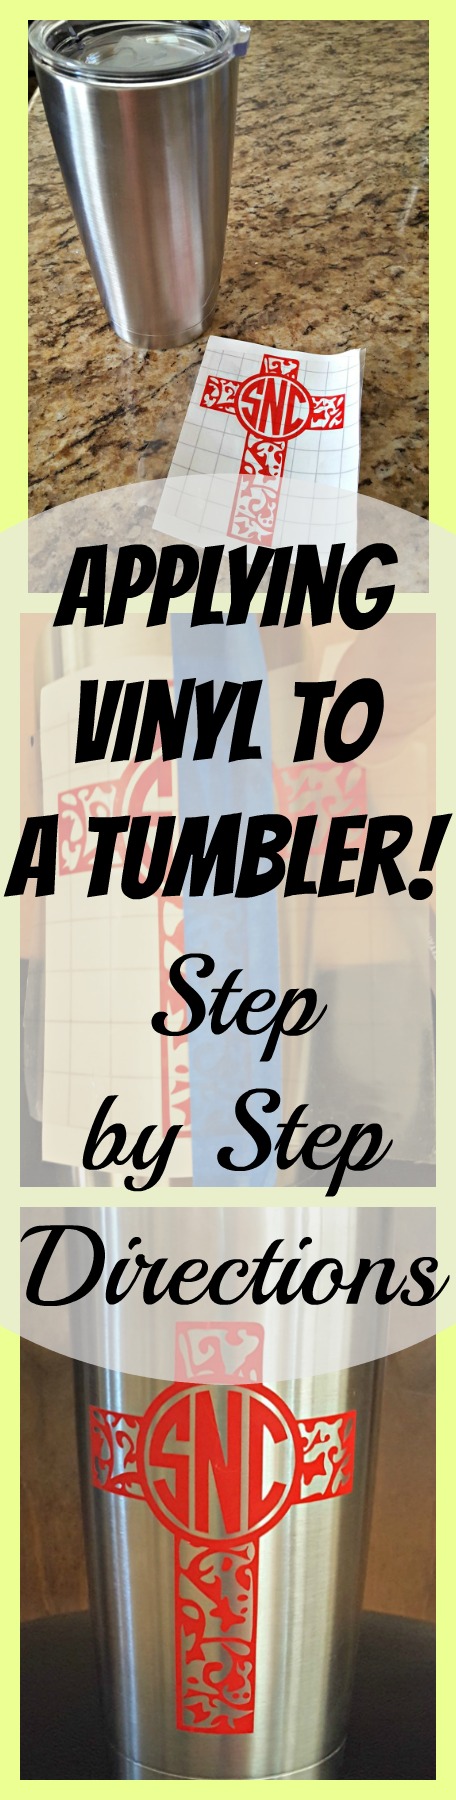 applying vinyl to a tumbler